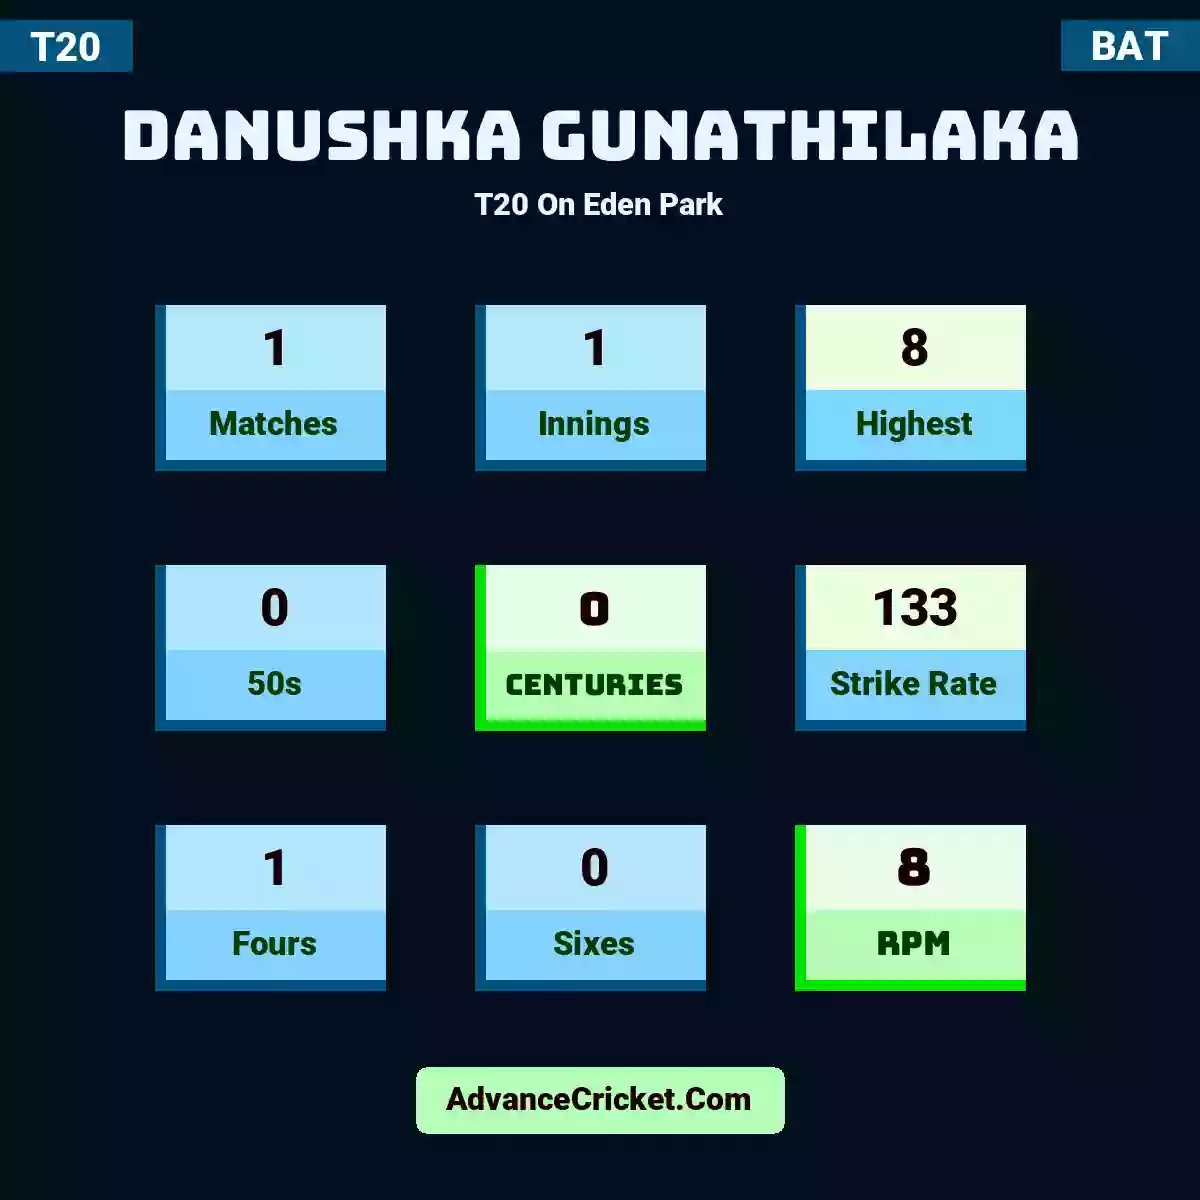 Danushka Gunathilaka T20  On Eden Park, Danushka Gunathilaka played 1 matches, scored 8 runs as highest, 0 half-centuries, and 0 centuries, with a strike rate of 133. D.Gunathilaka hit 1 fours and 0 sixes, with an RPM of 8.